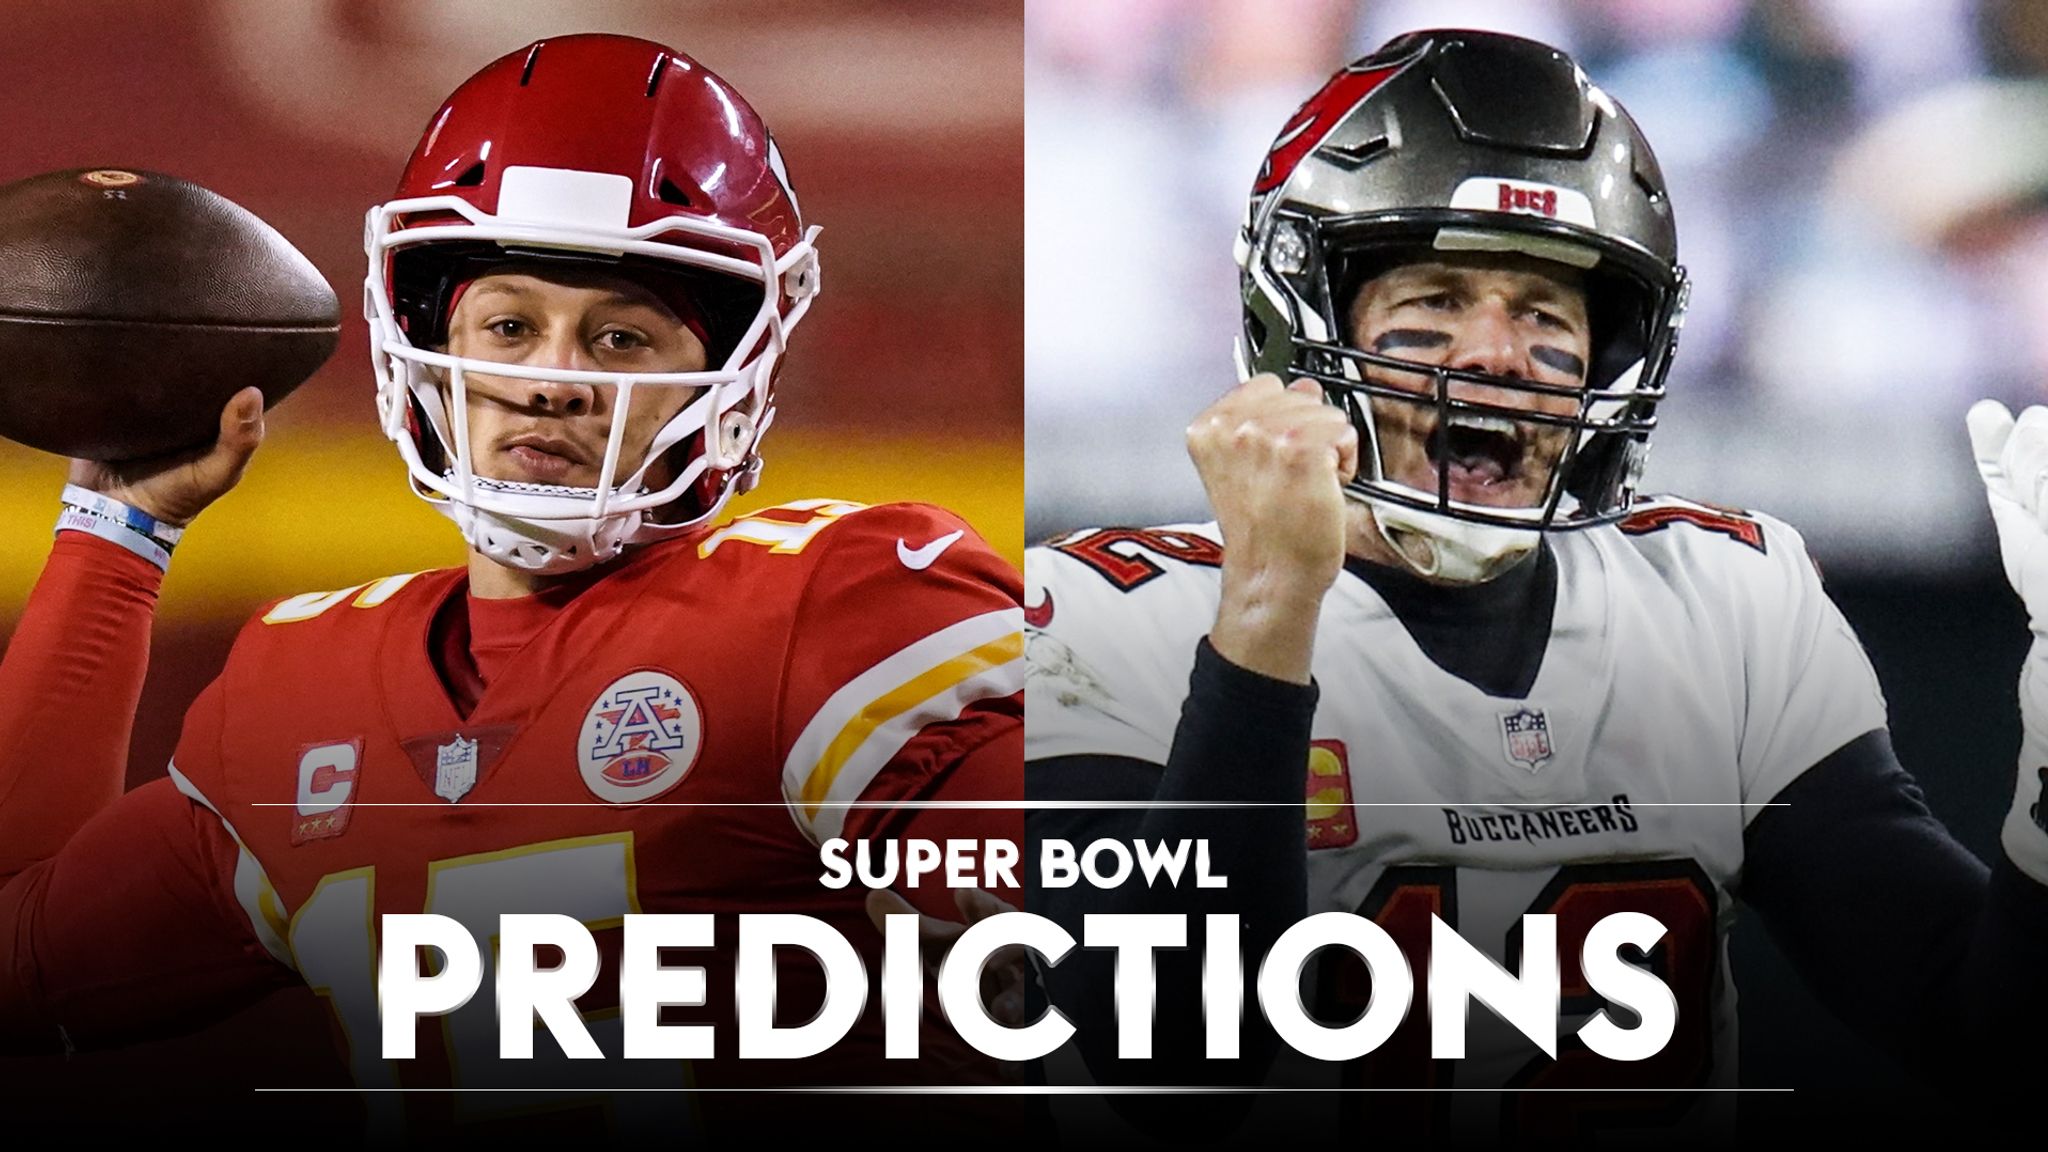 predictions on super bowl 2022